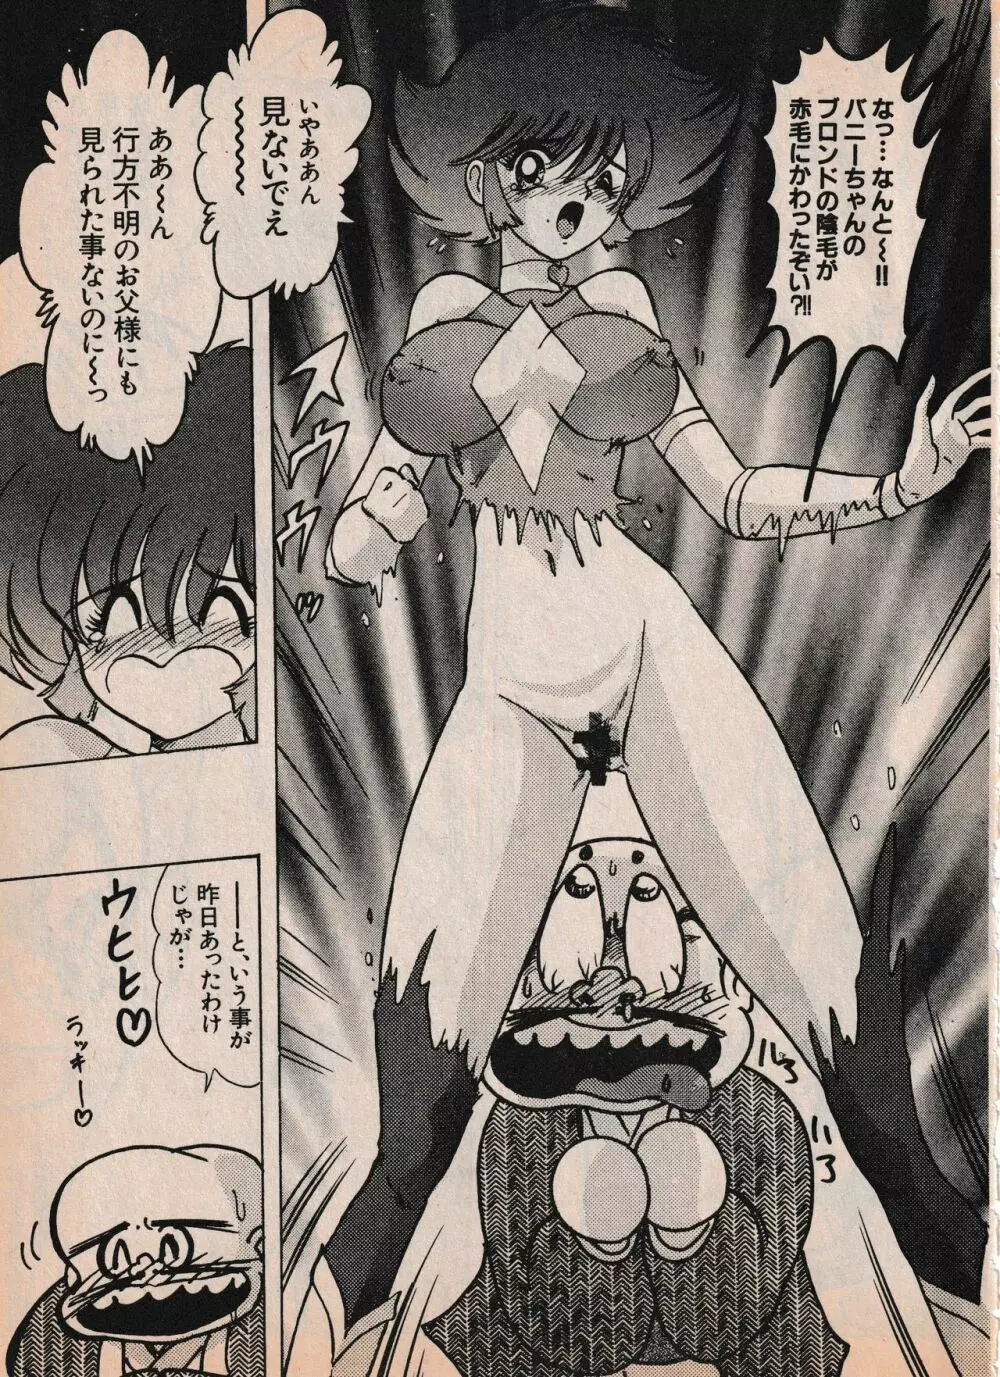 Sailor X vol. 4 - Sailor X vs. Cunty Horny! - page16